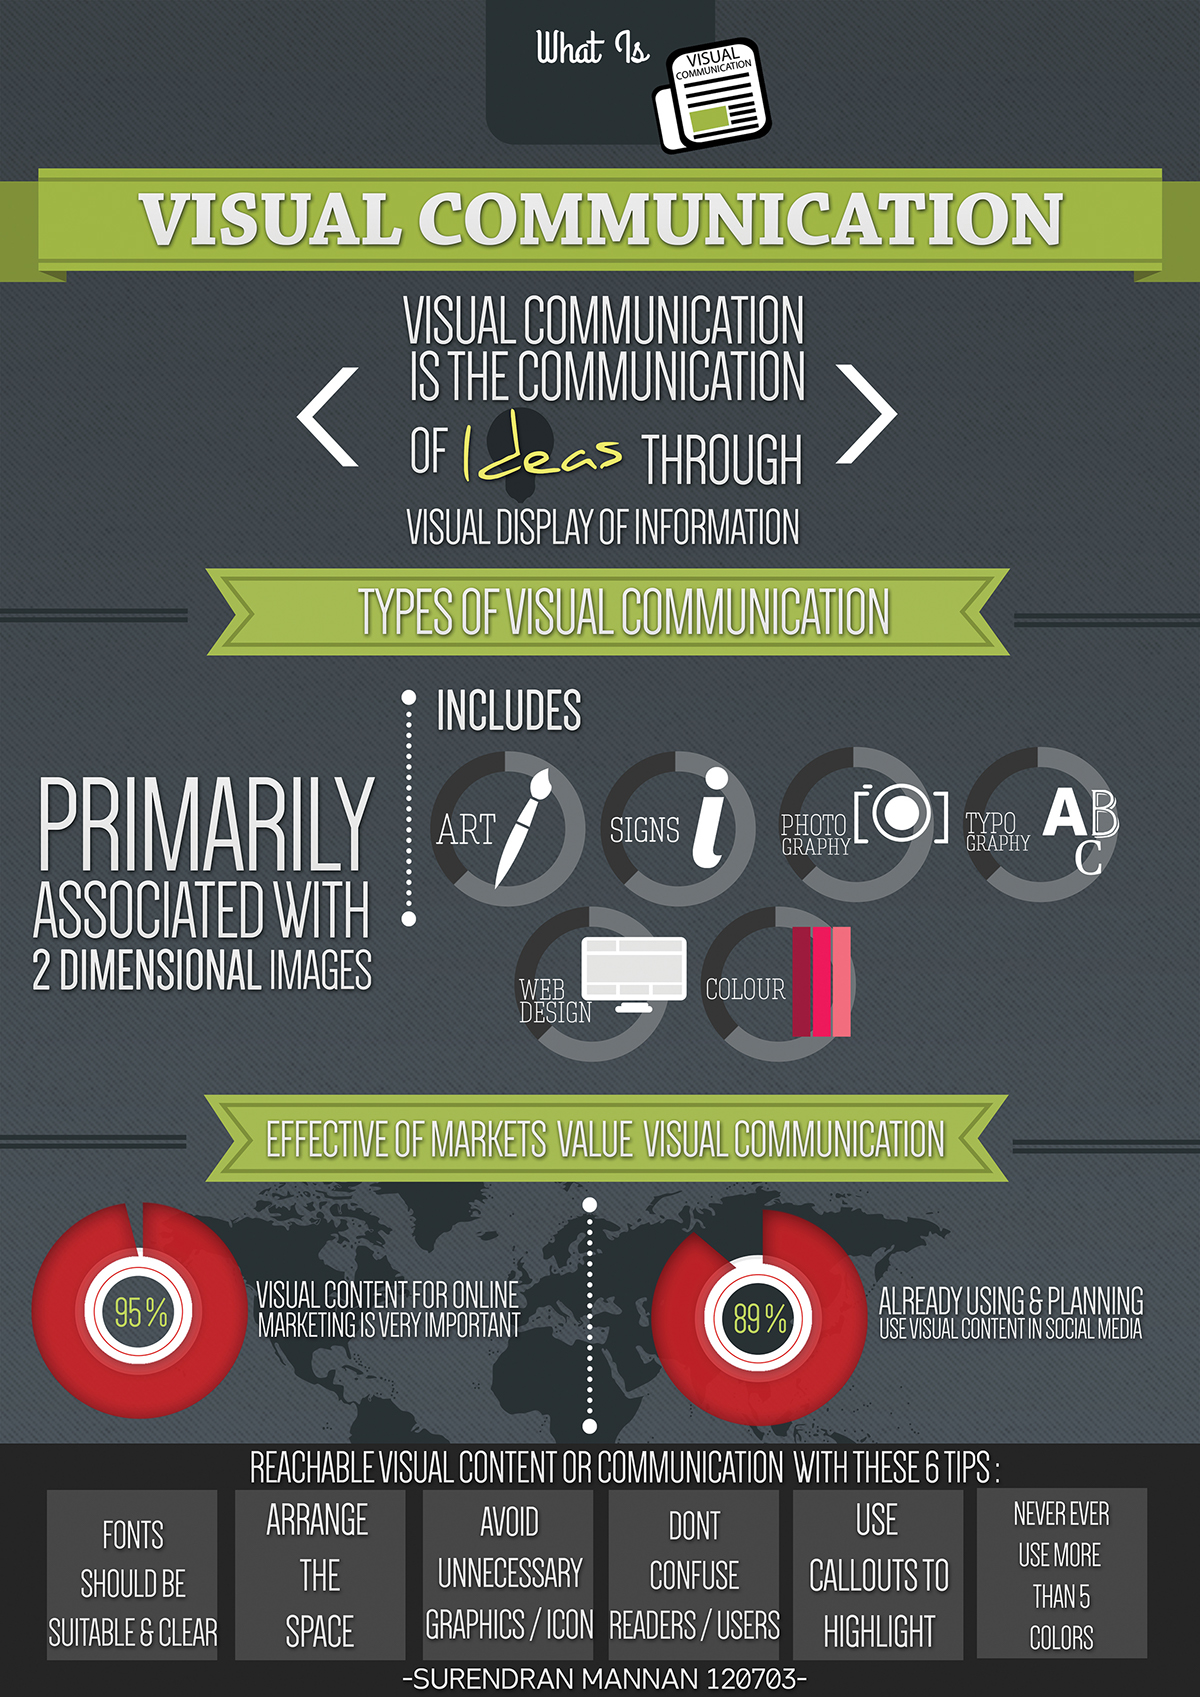 #infographics #design